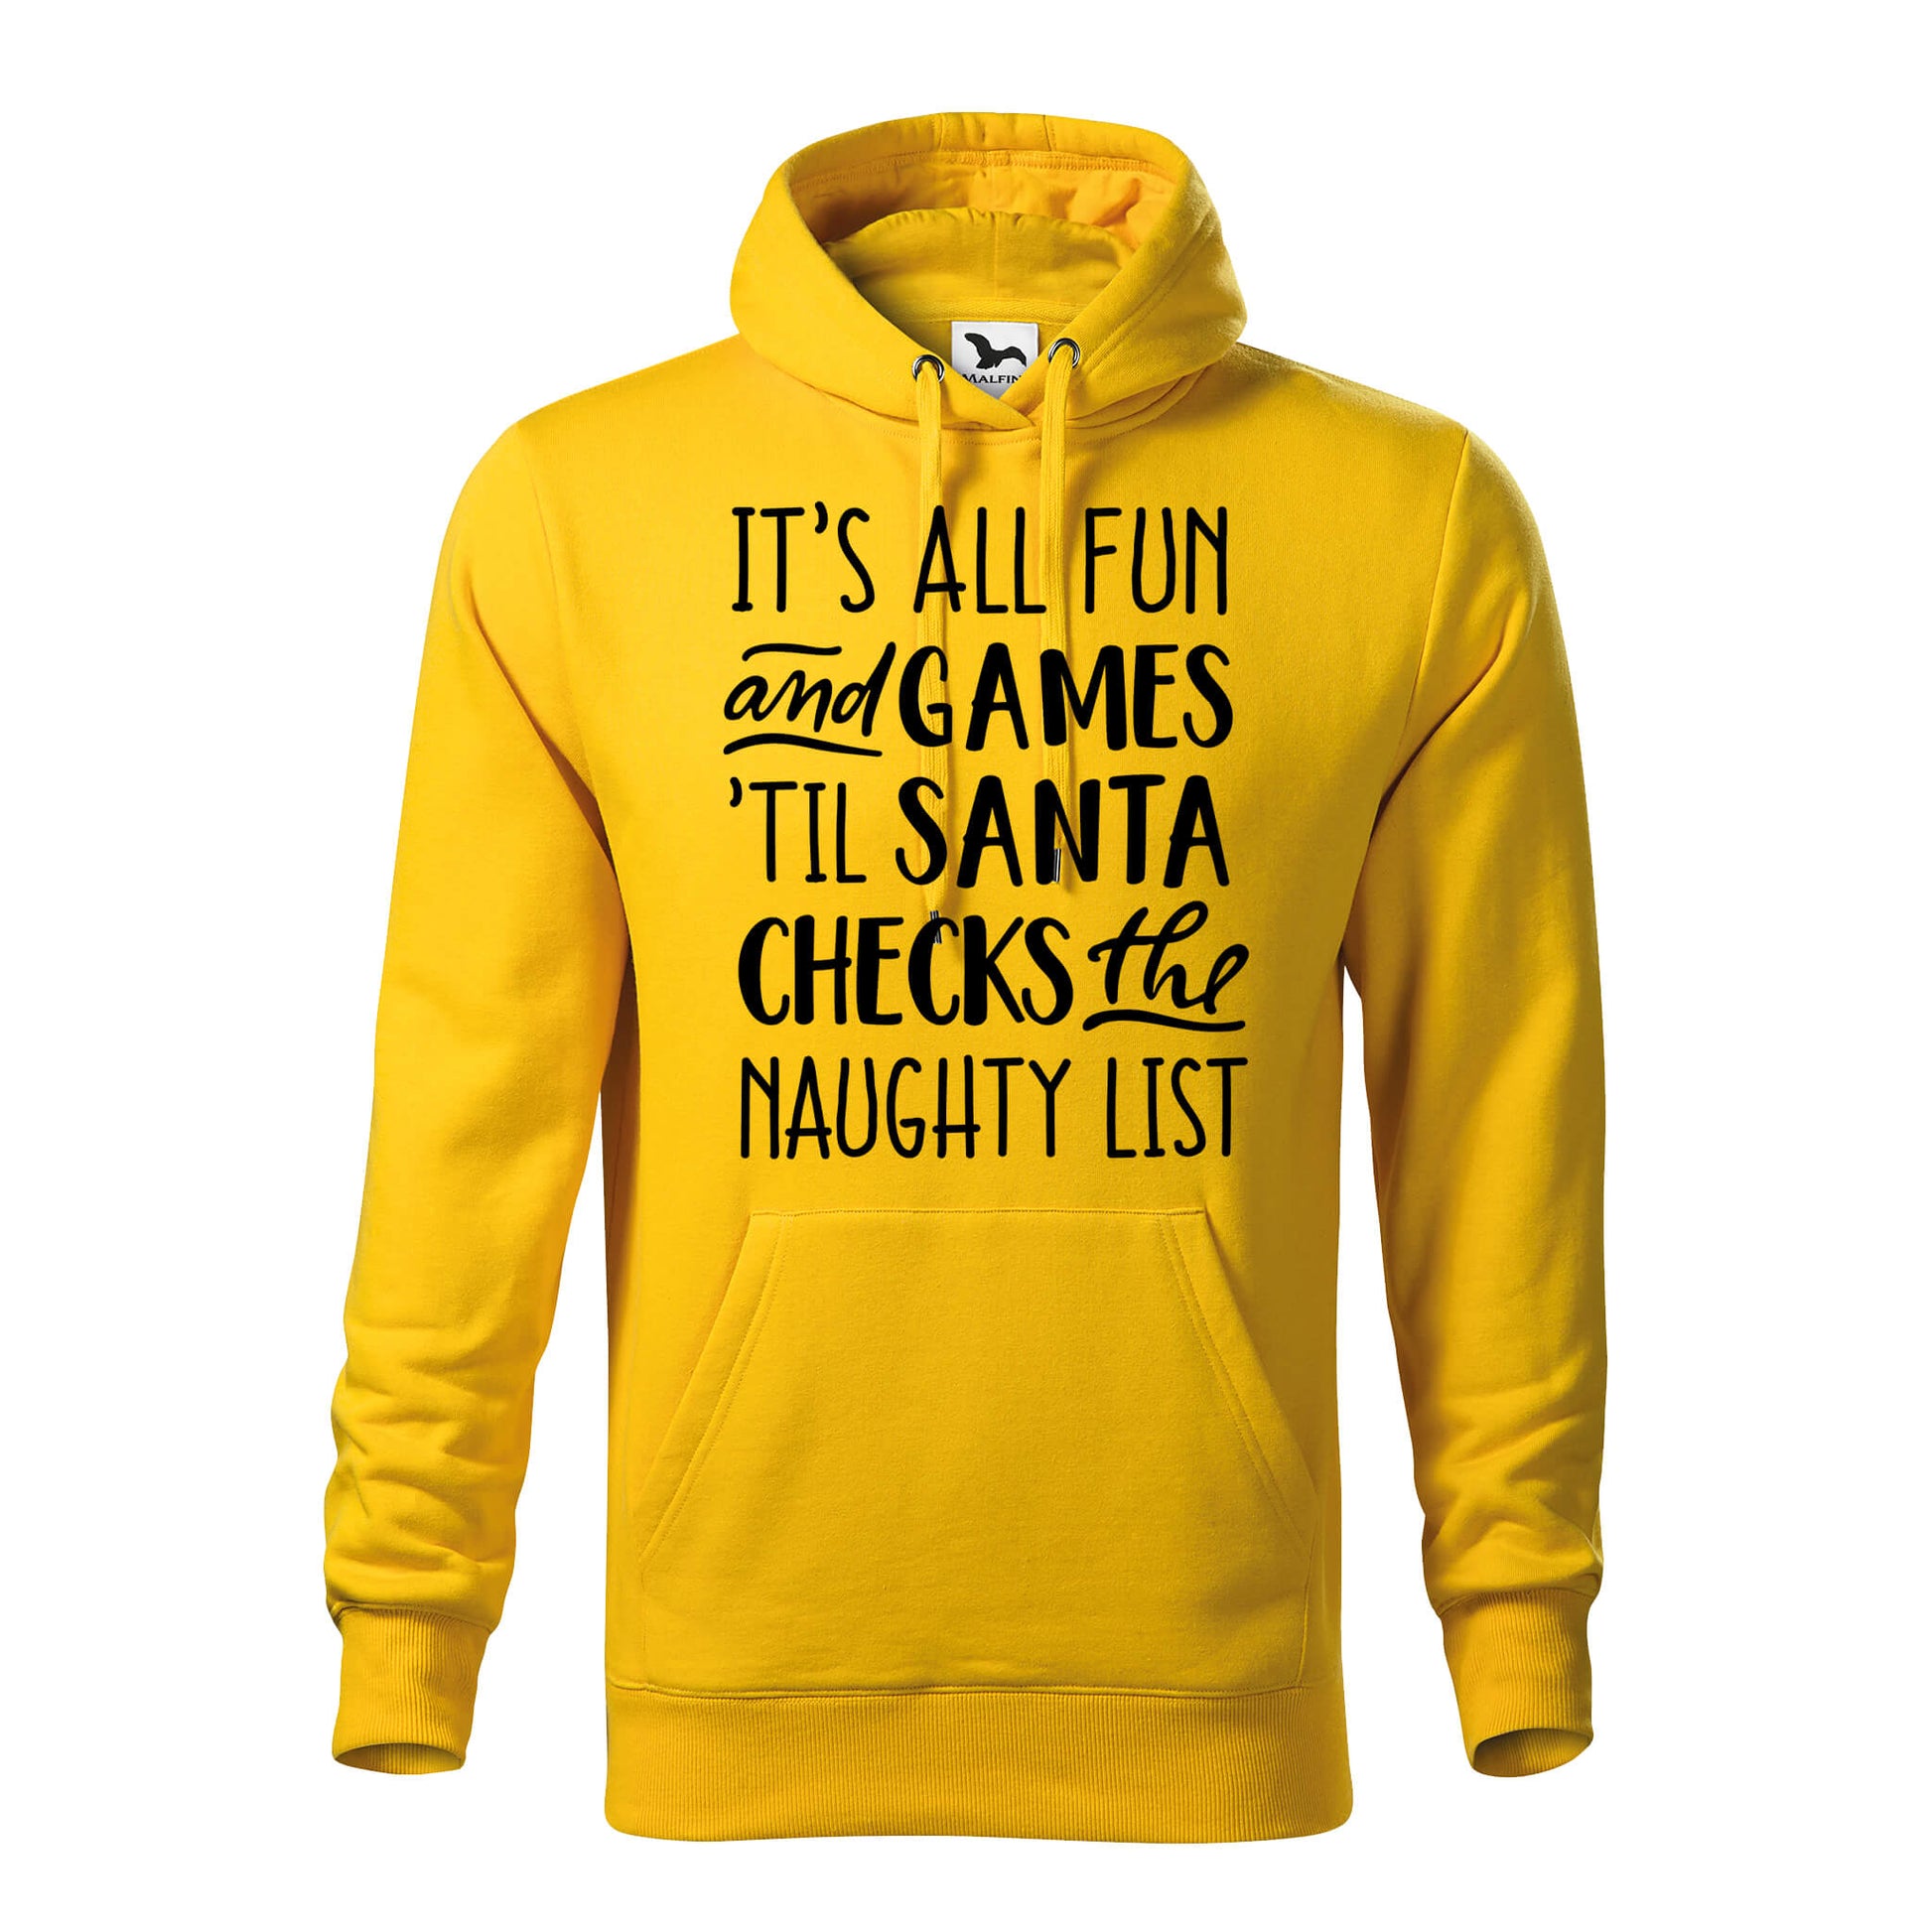 Fun and games naughty list hoodie - rvdesignprint